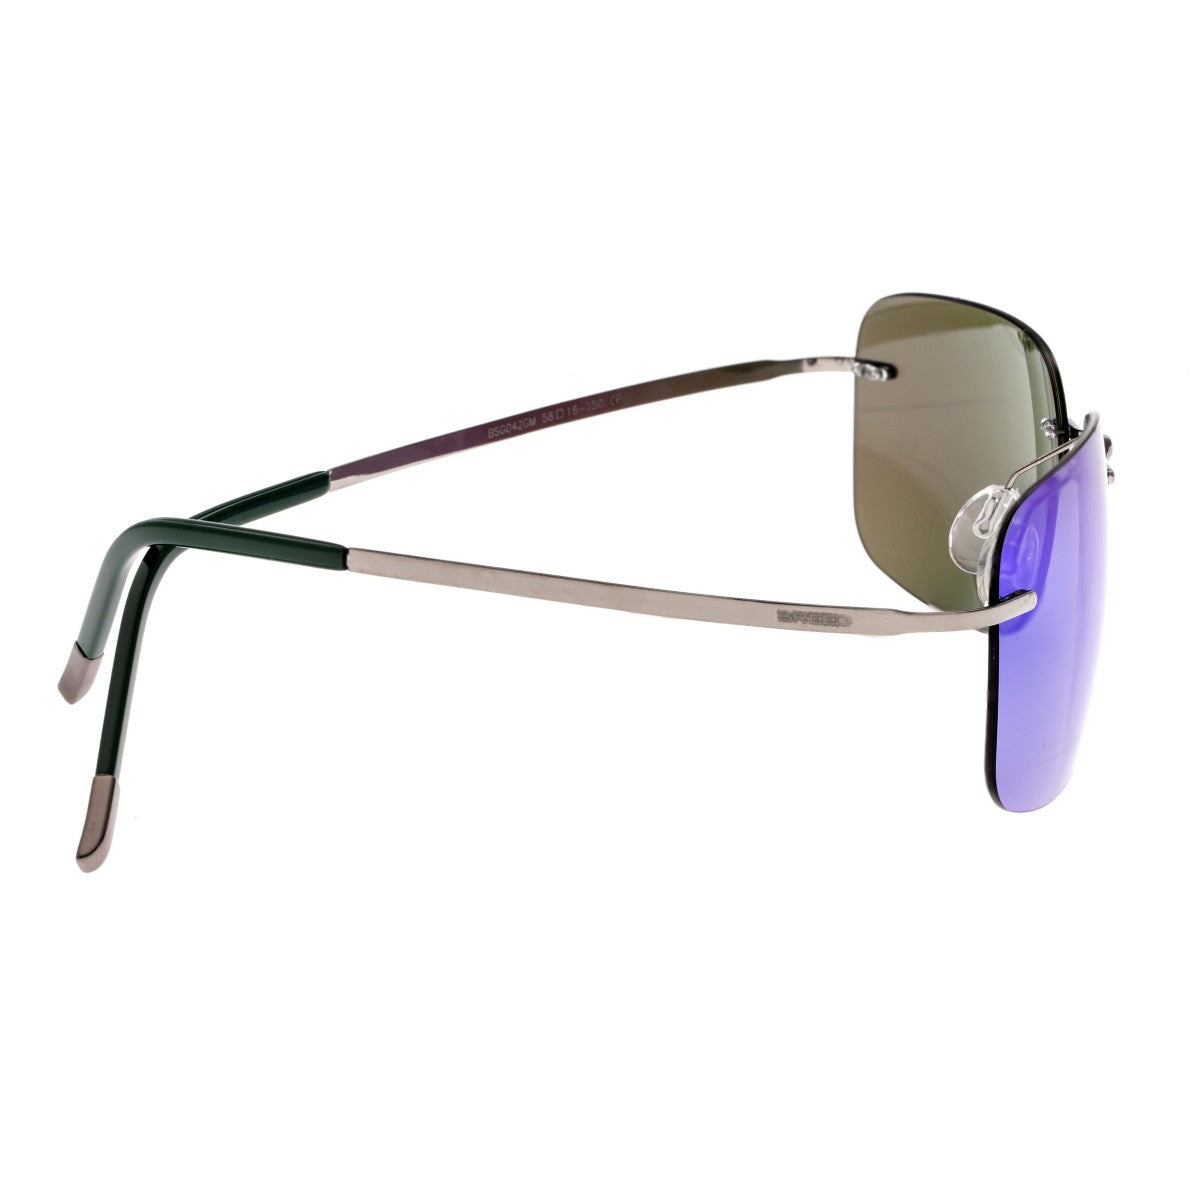 Breed Orbit Titanium Polarized Sunglasses - Gunmetal/Blue-Green - BSG042GM